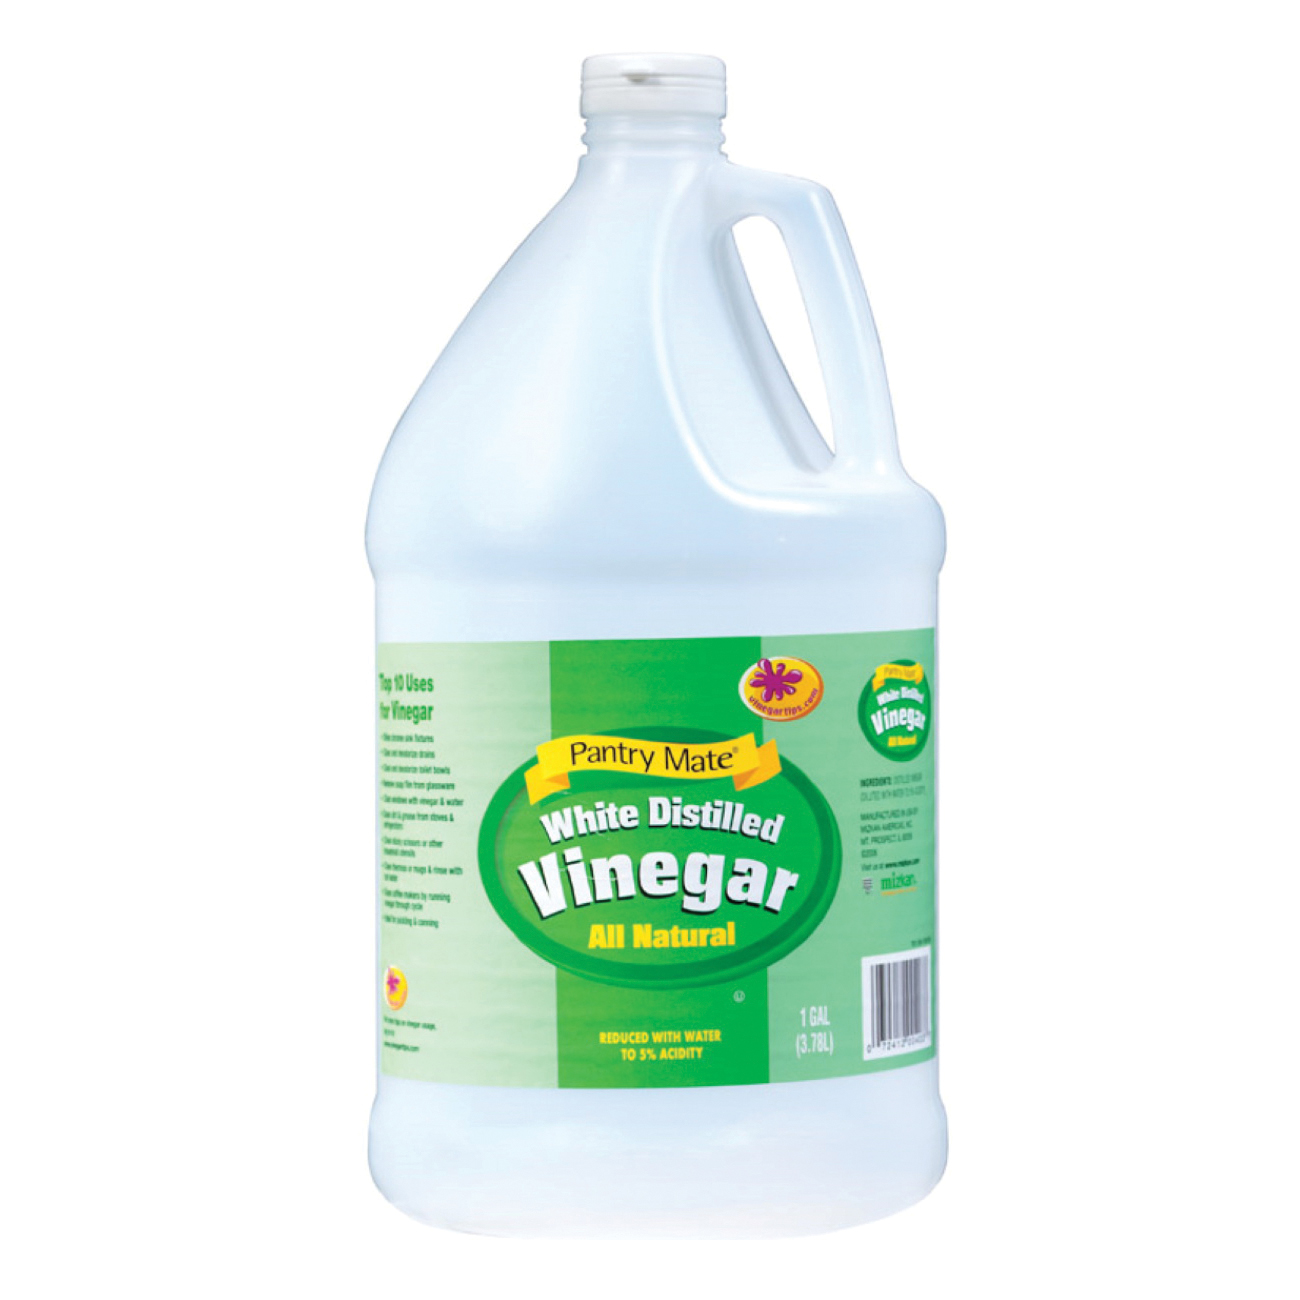 Pantry Mate 72412 00403 White Distilled Vinegar, 1 gal Bottle, Liquid - 1